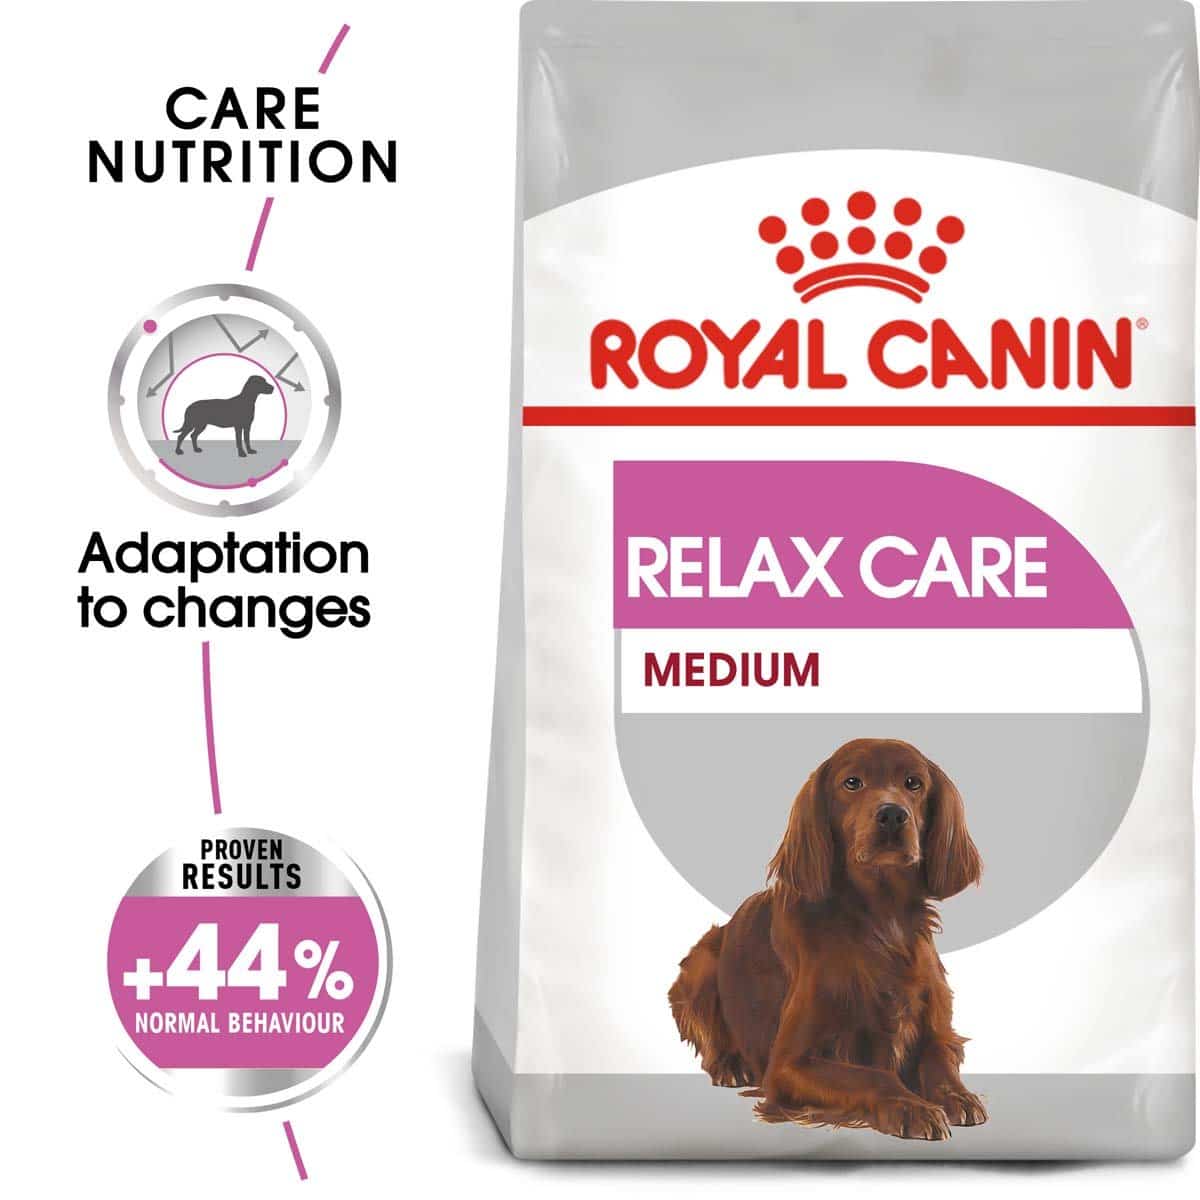 ROYAL CANIN RELAX CARE MEDIUM Trockenfutter für mittelgroße Hunde in unruhigem Umfeld 2x10kg